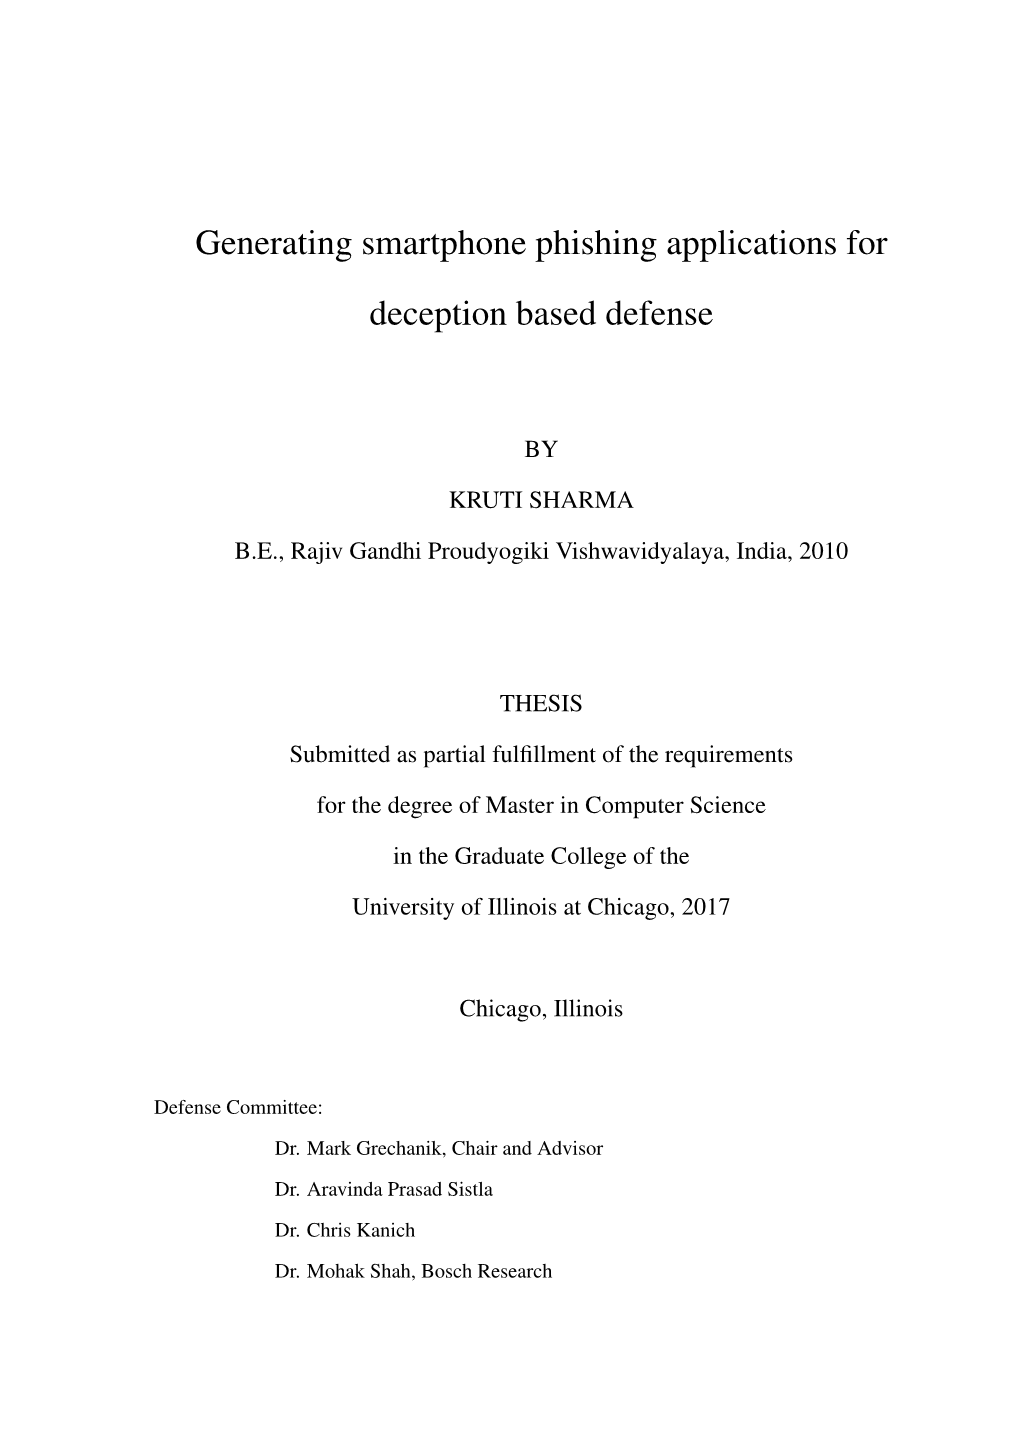 Generating Smartphone Phishing Applications for Deception Based Defense